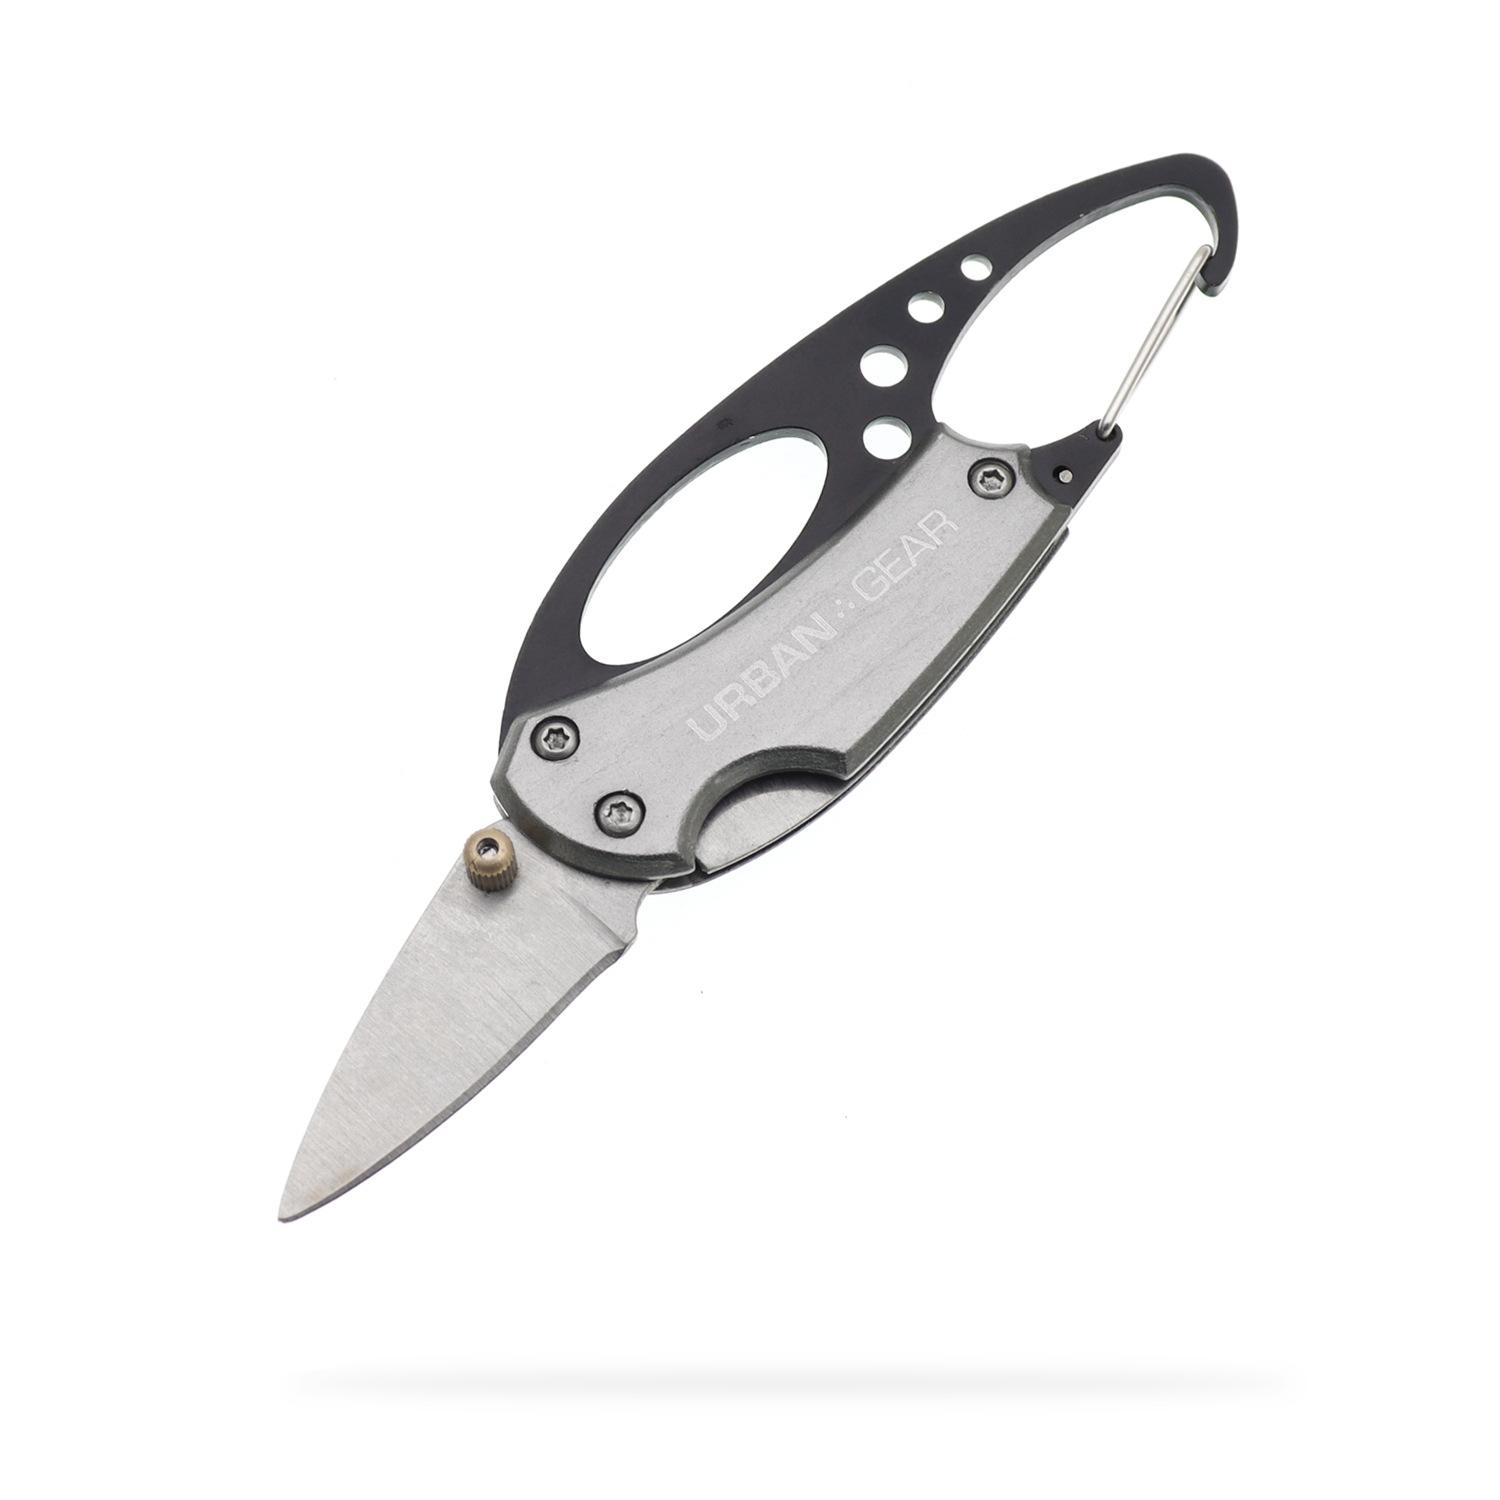 Source manufacturer folding gift knife carabiner knife express unboxing knife key chain mini portable gadget knife